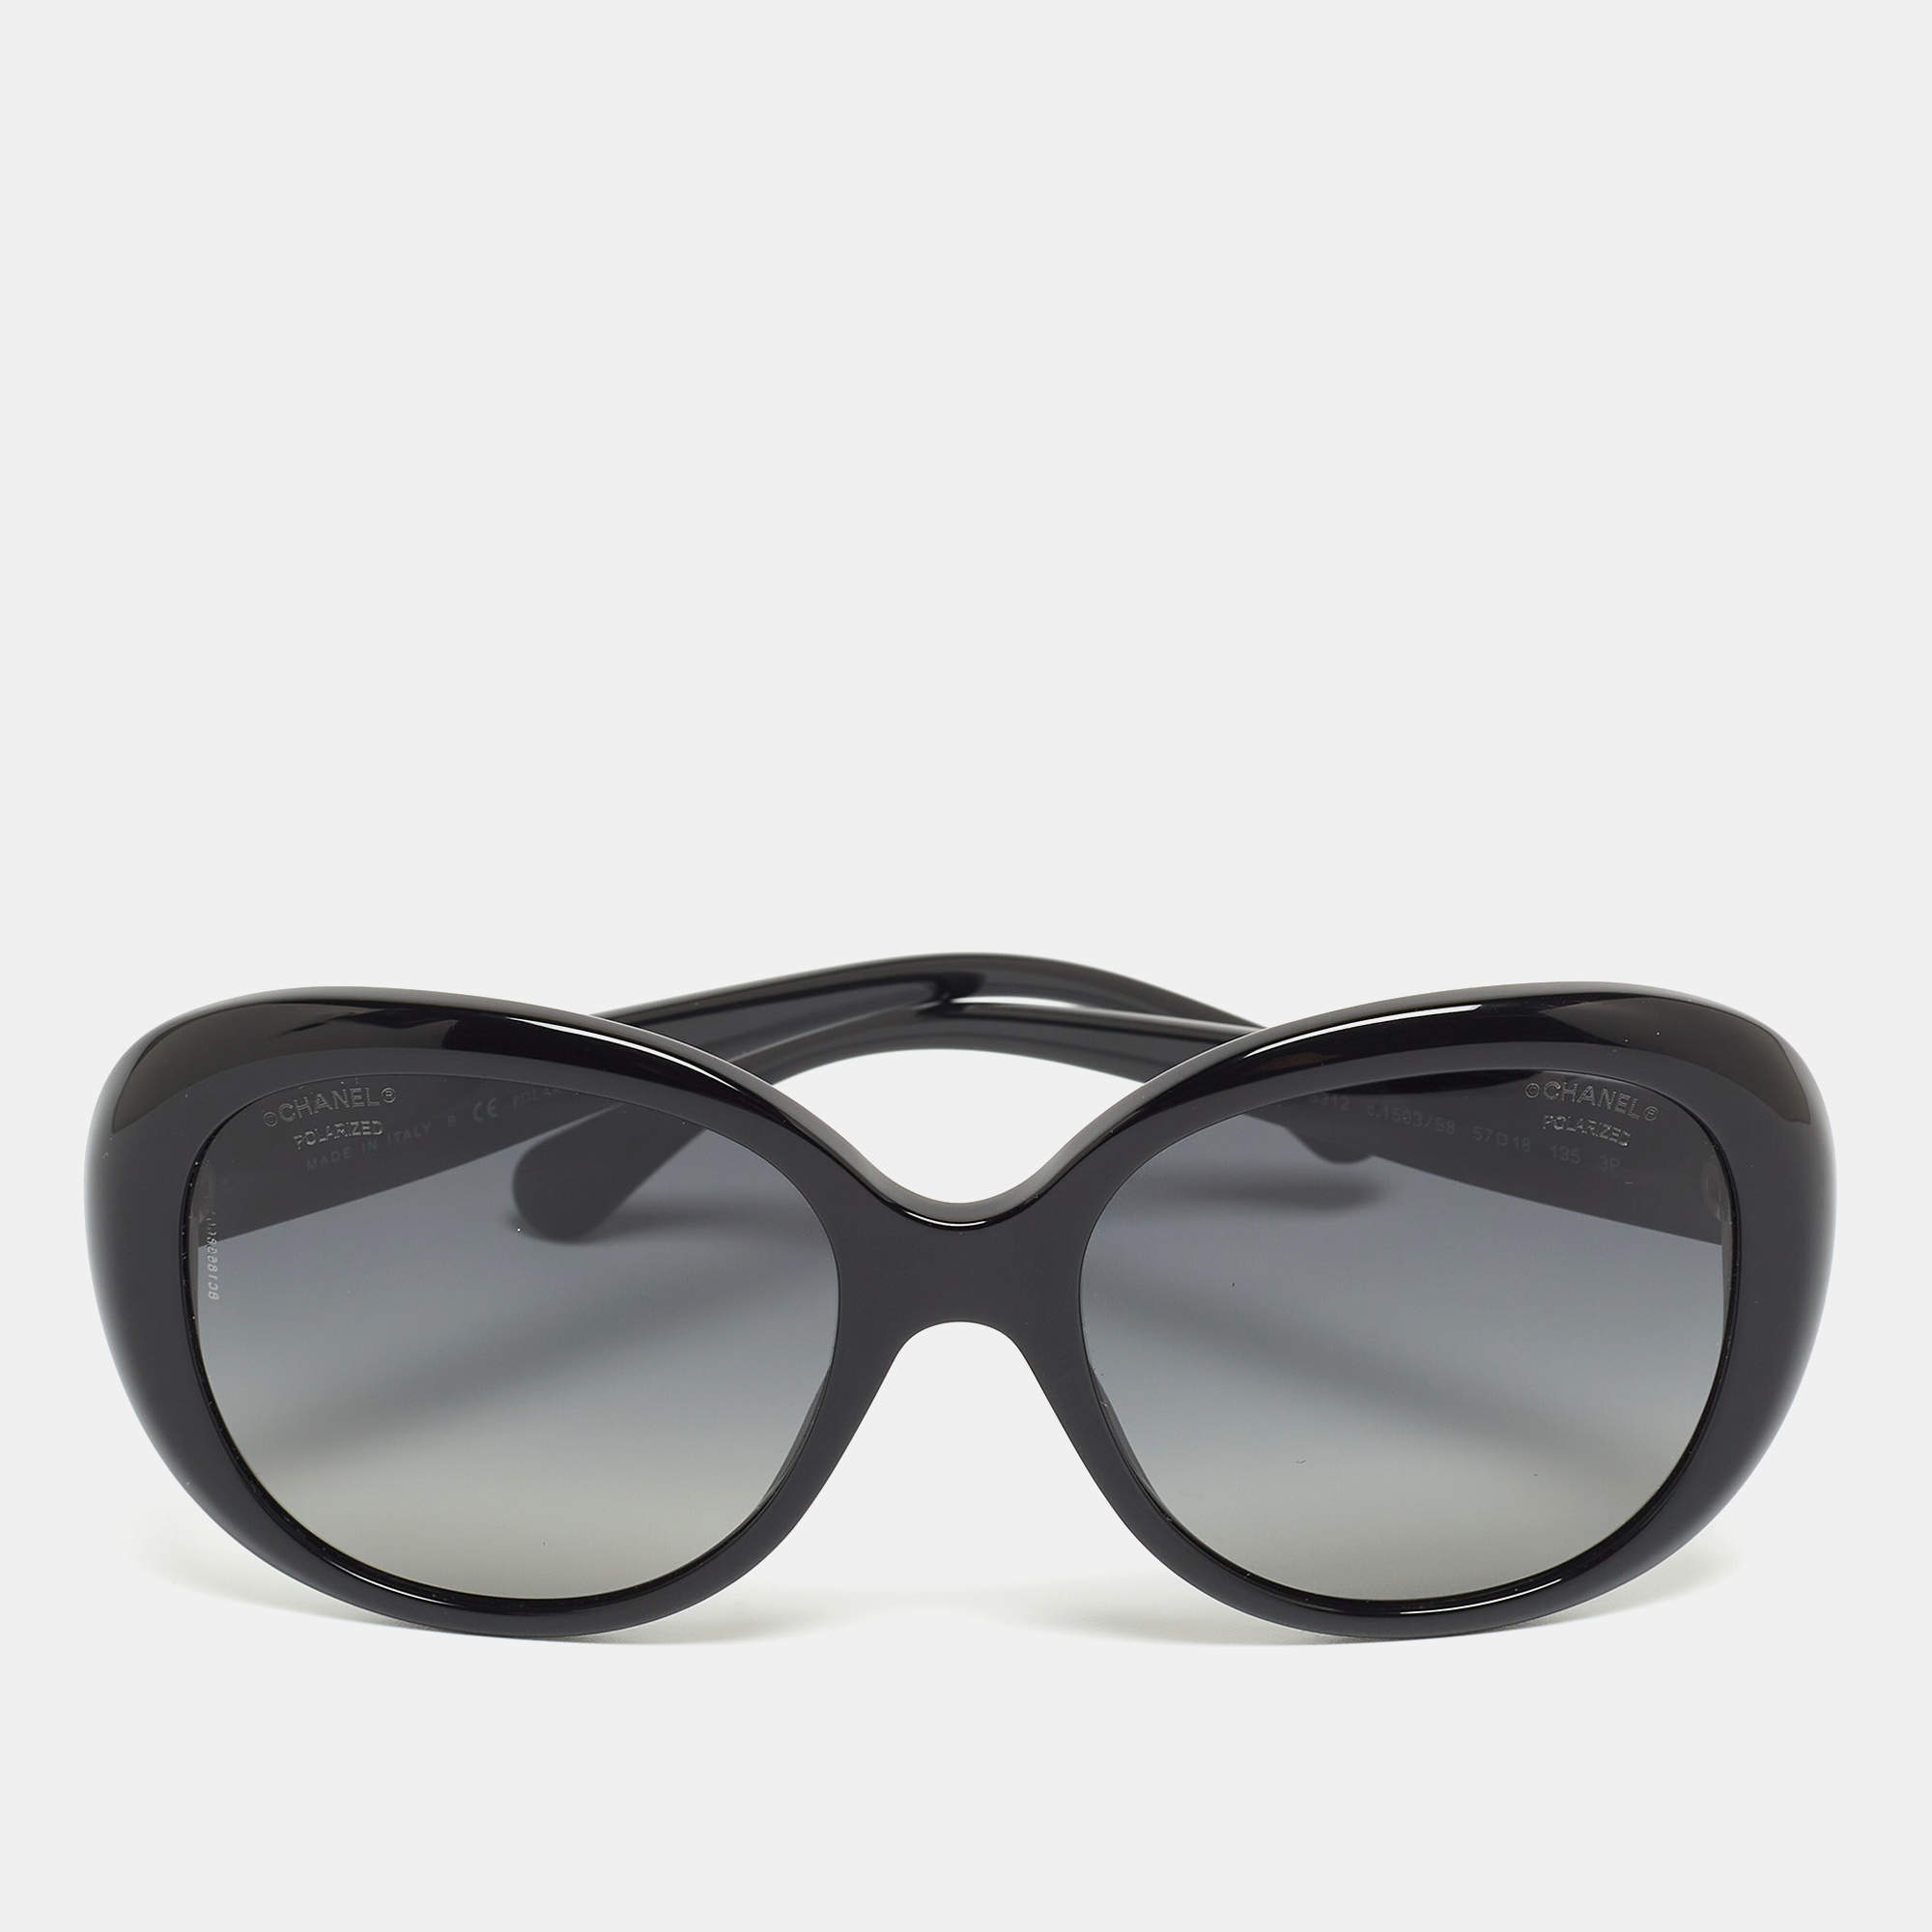 Chanel Black Gradient 5312 Oval Sunglasses